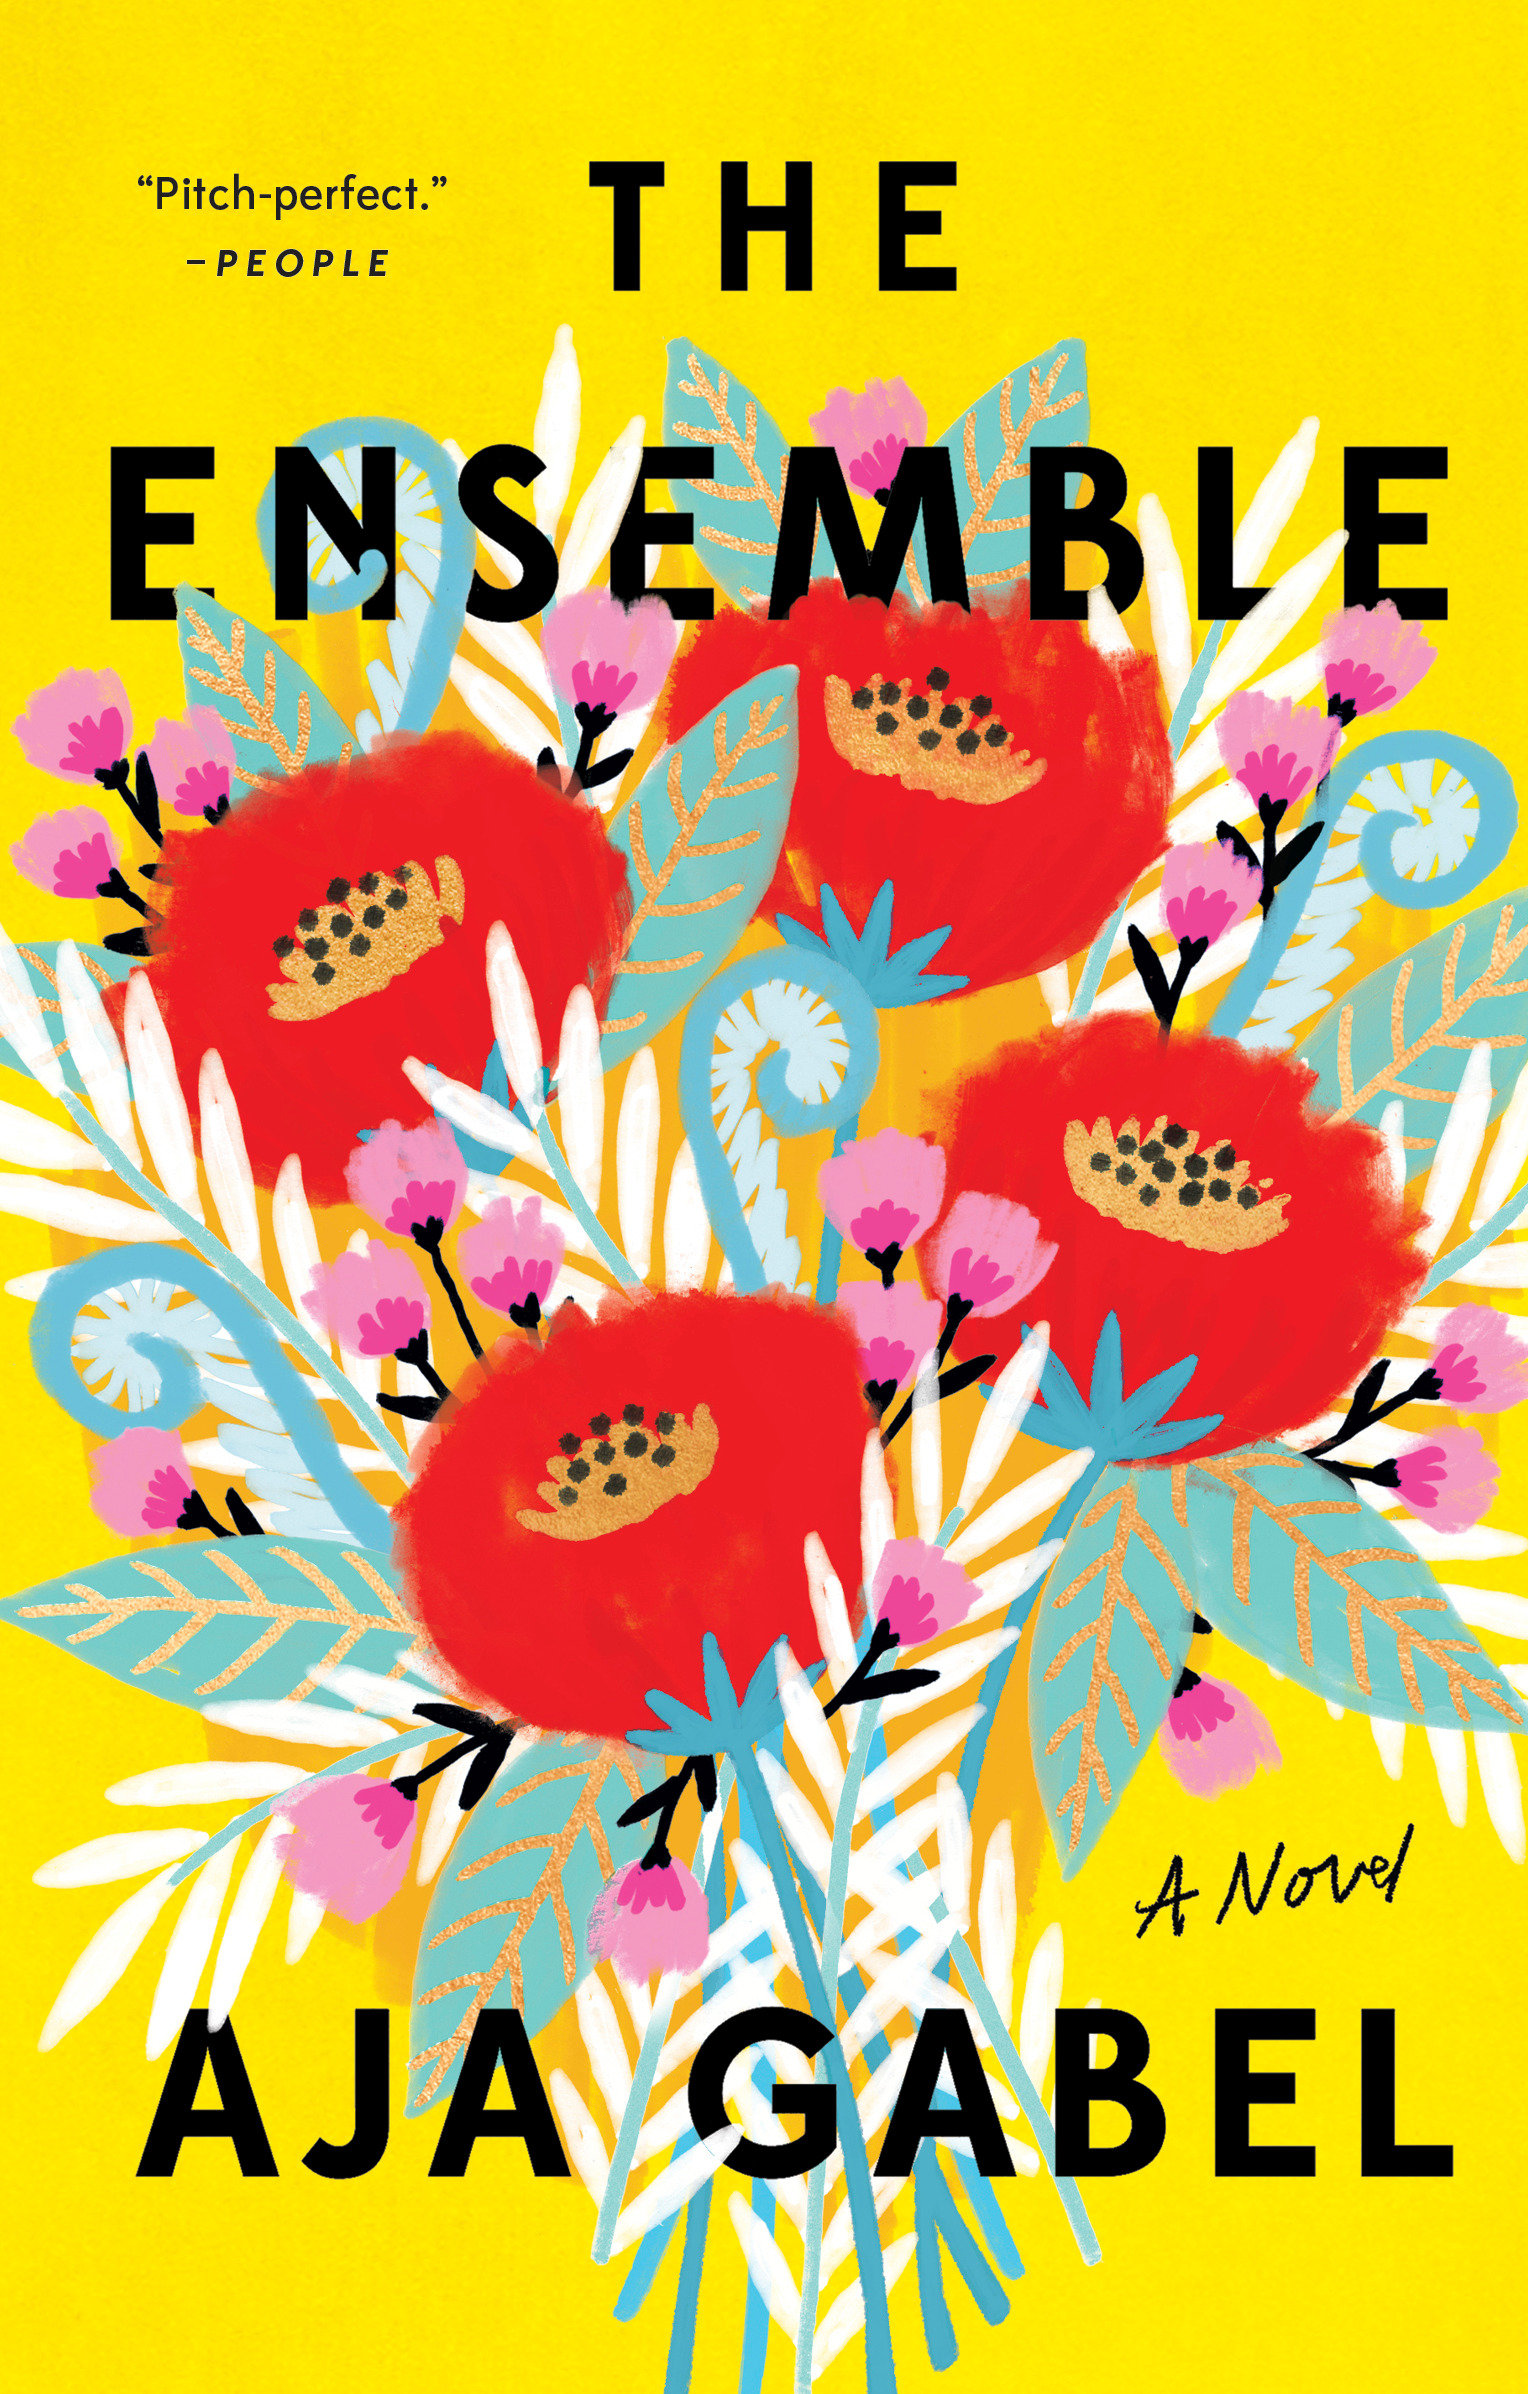 The ensemble cover image